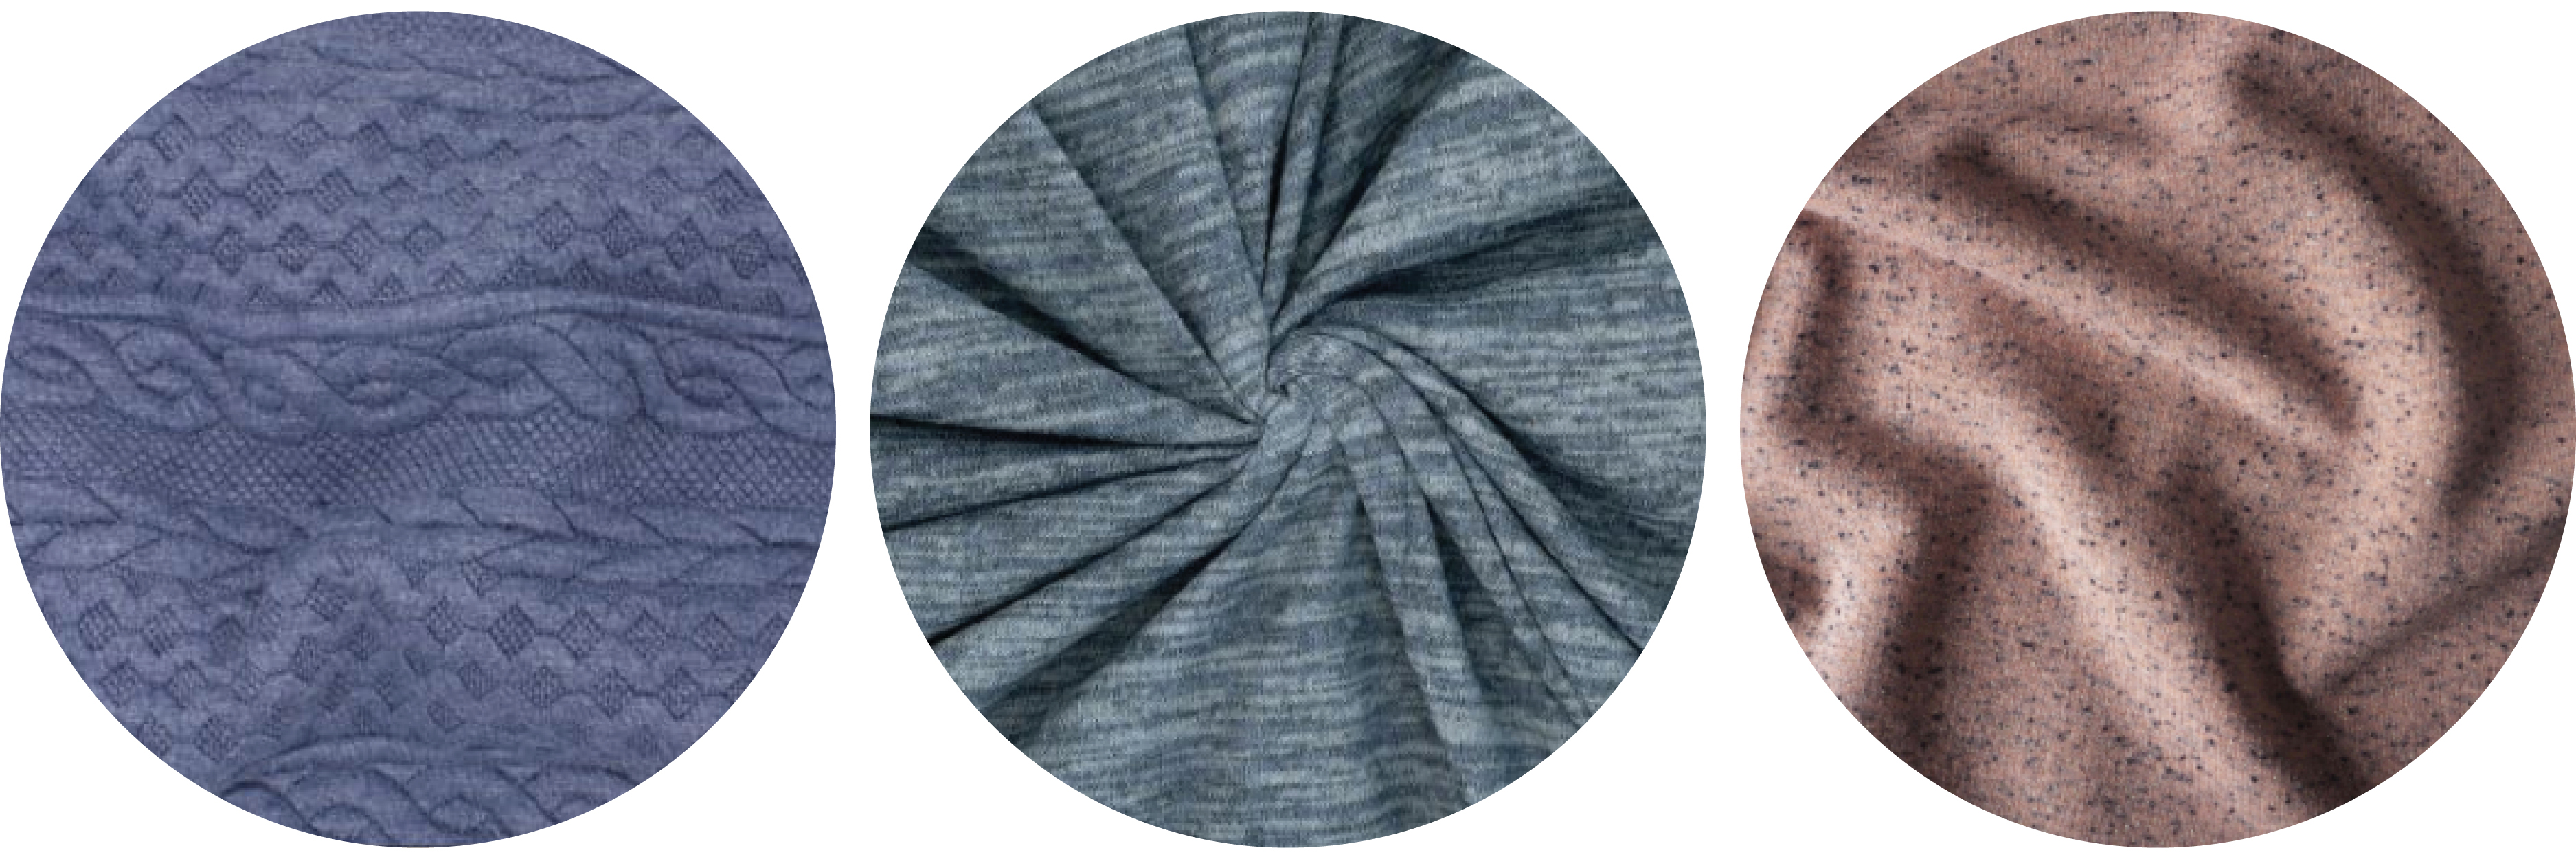 Tobin Sweater knit fabric ideas: textured solids